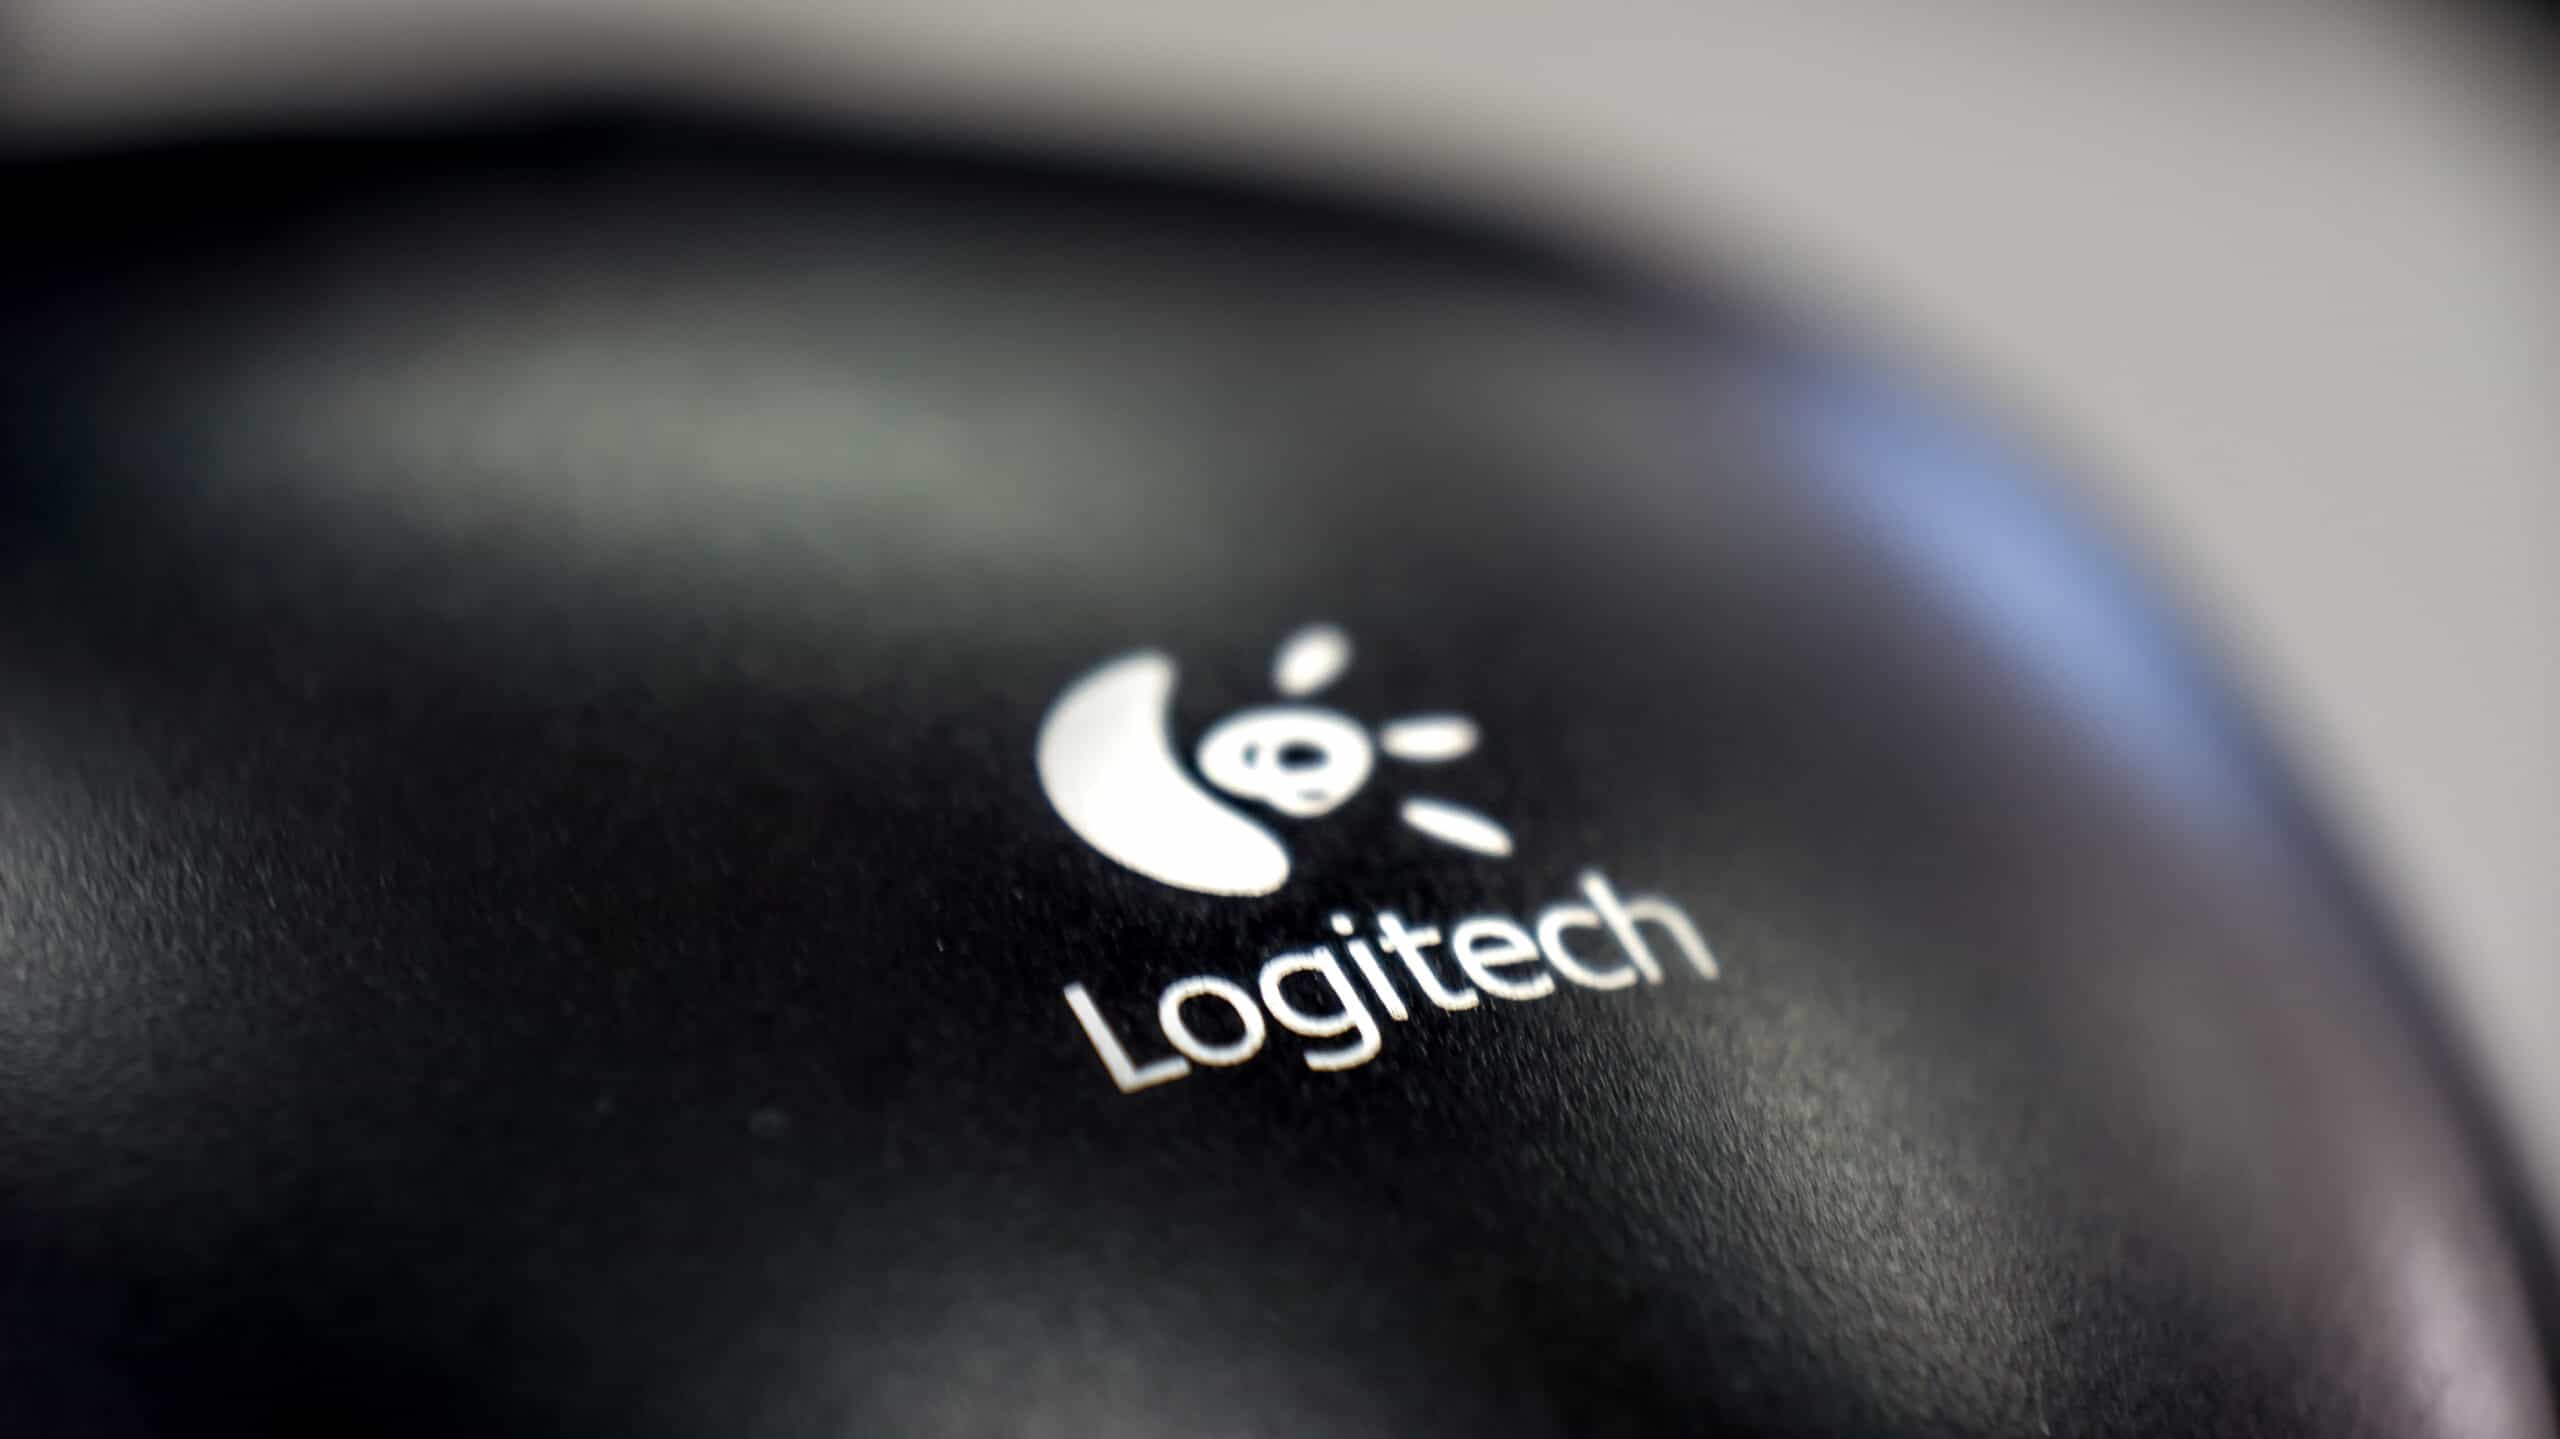 Logitech branded wireless mouse